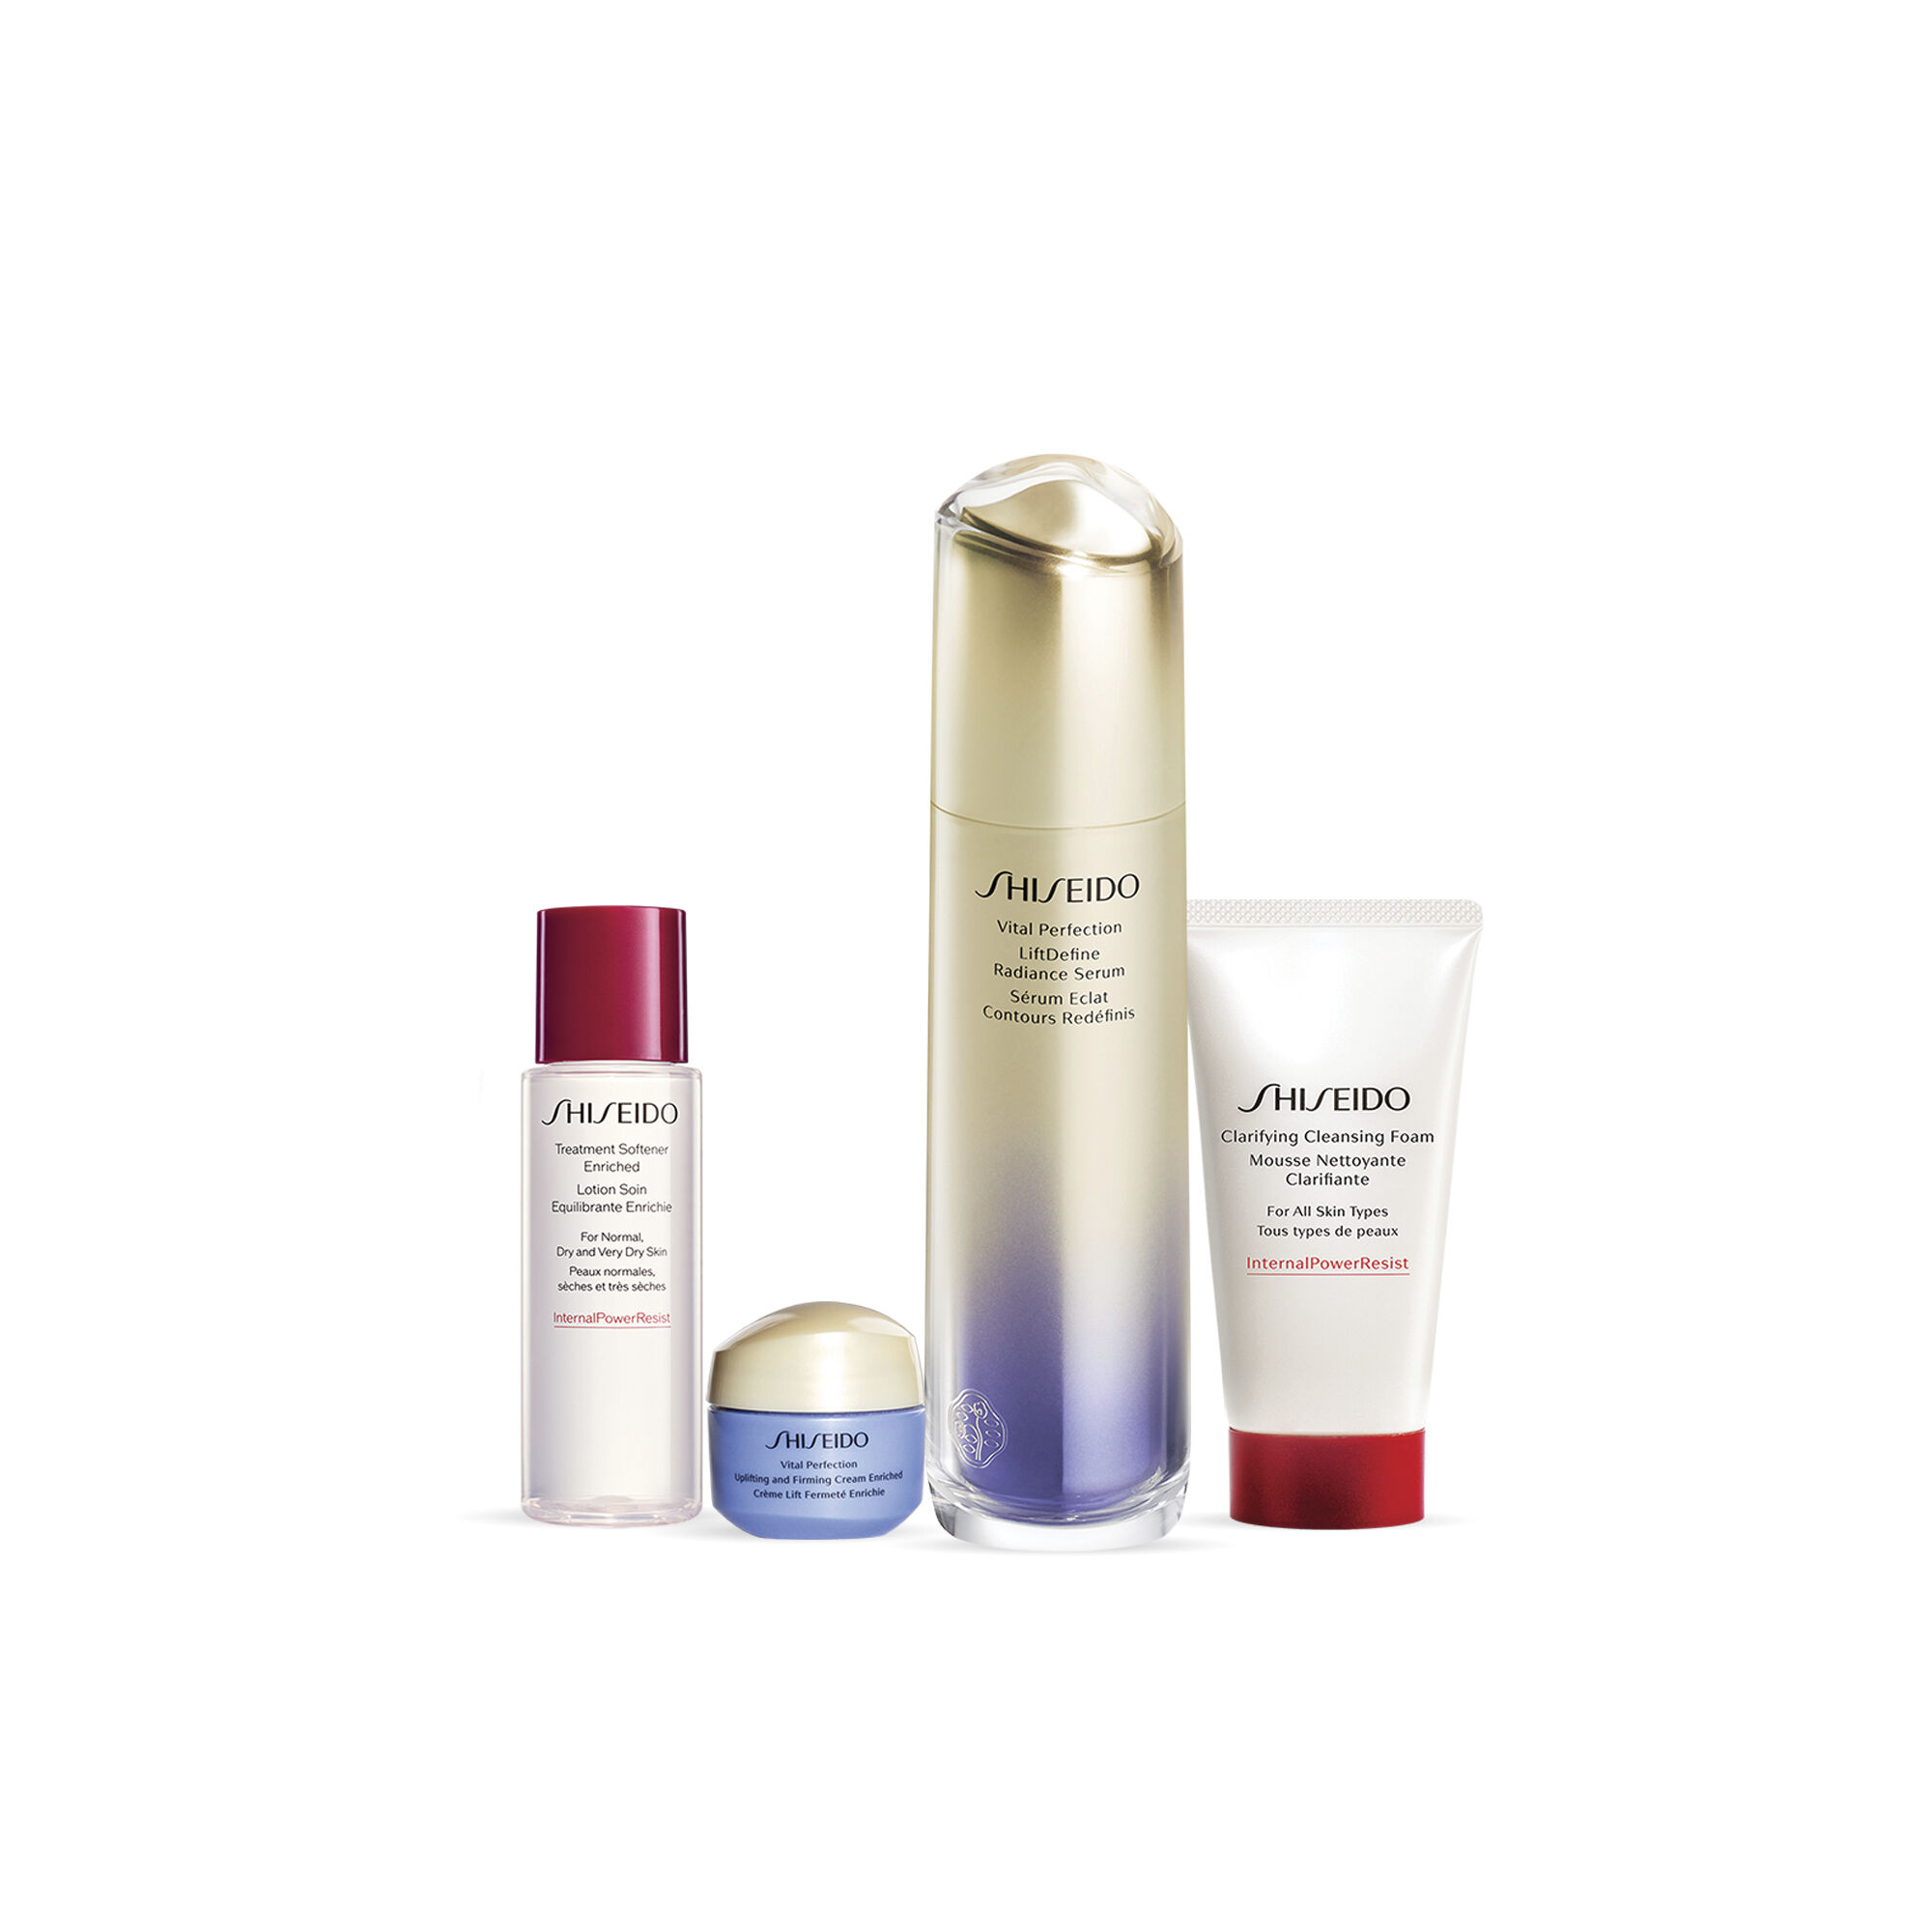 Shiseido Vital Perfection Radiance Serum Set (Value $268)